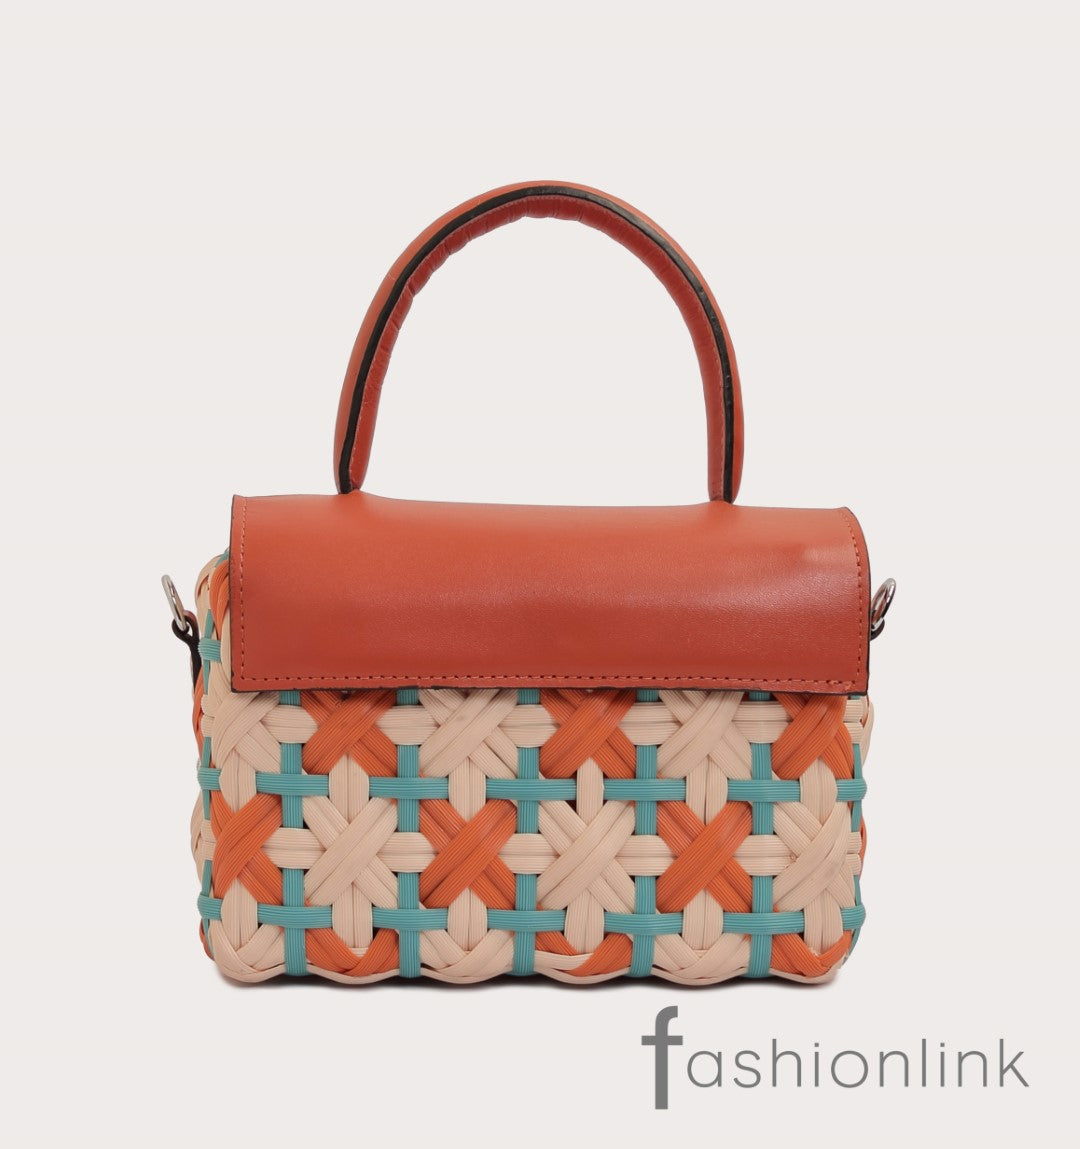 Fashionlink x Nadjani Dhena Bag